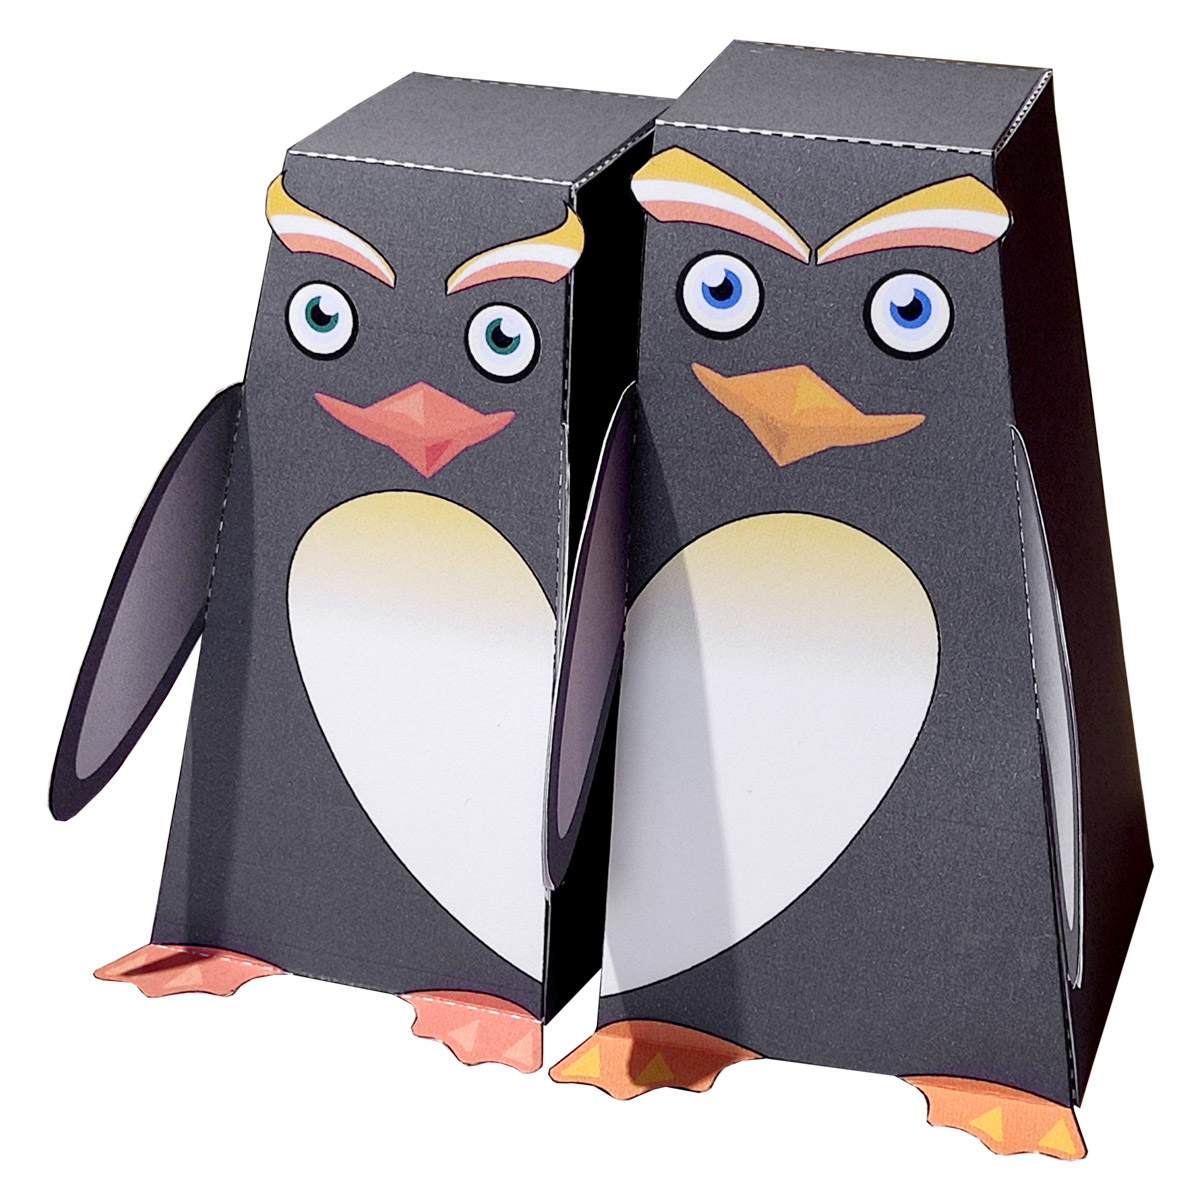 Penguins in love free printable paper model